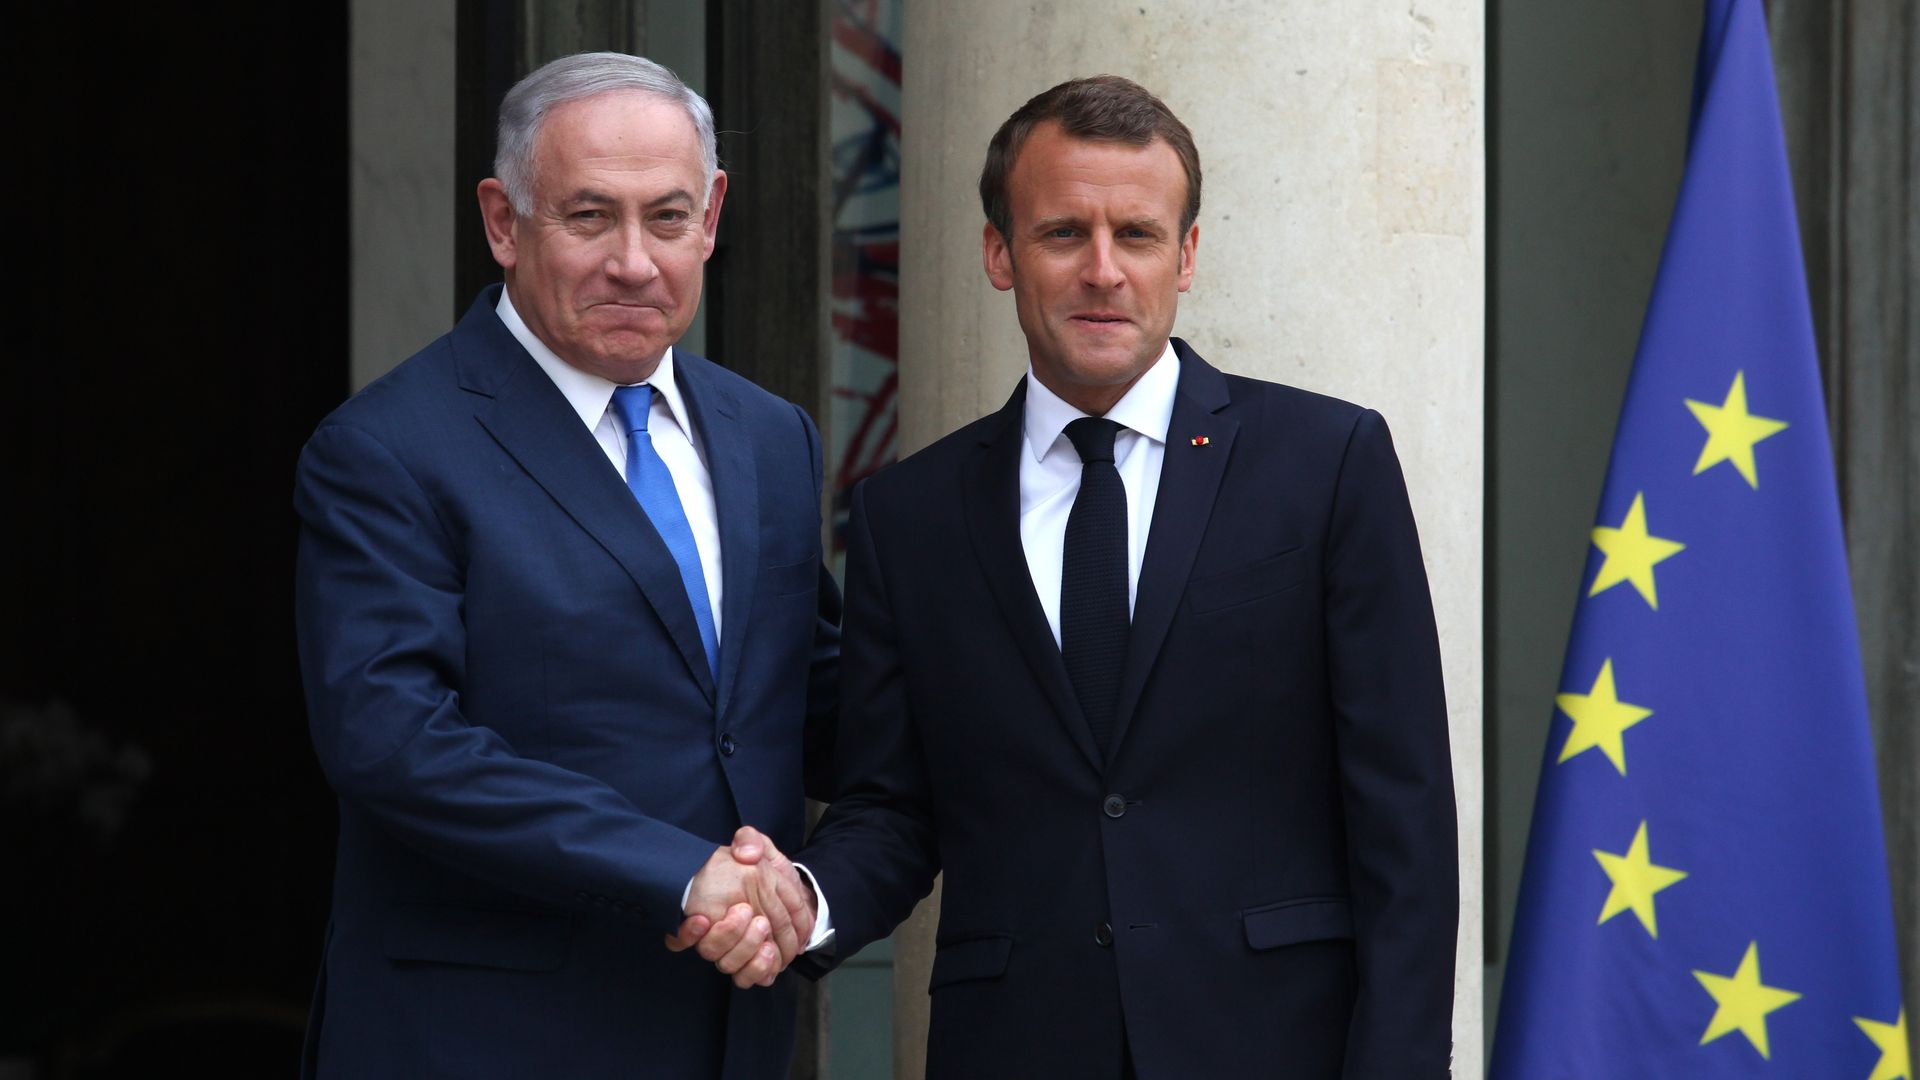 Israeli prime minister Benjamin Netanyahu shakes hands with French president Emmanuel Macron